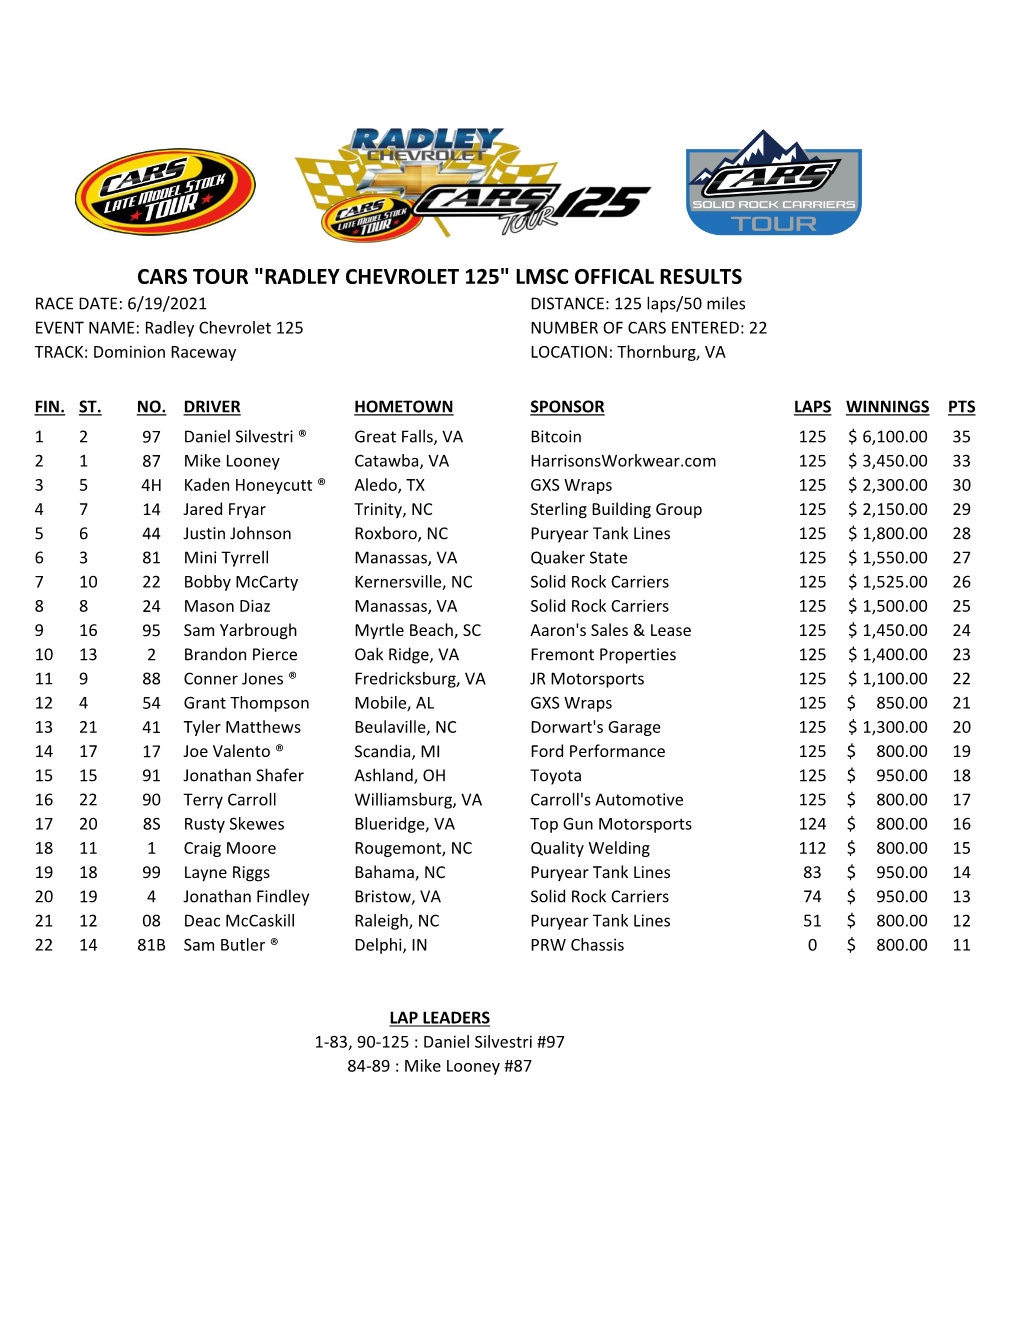 Cars Tour "Radley Chevrolet 125" Lmsc Offical Results